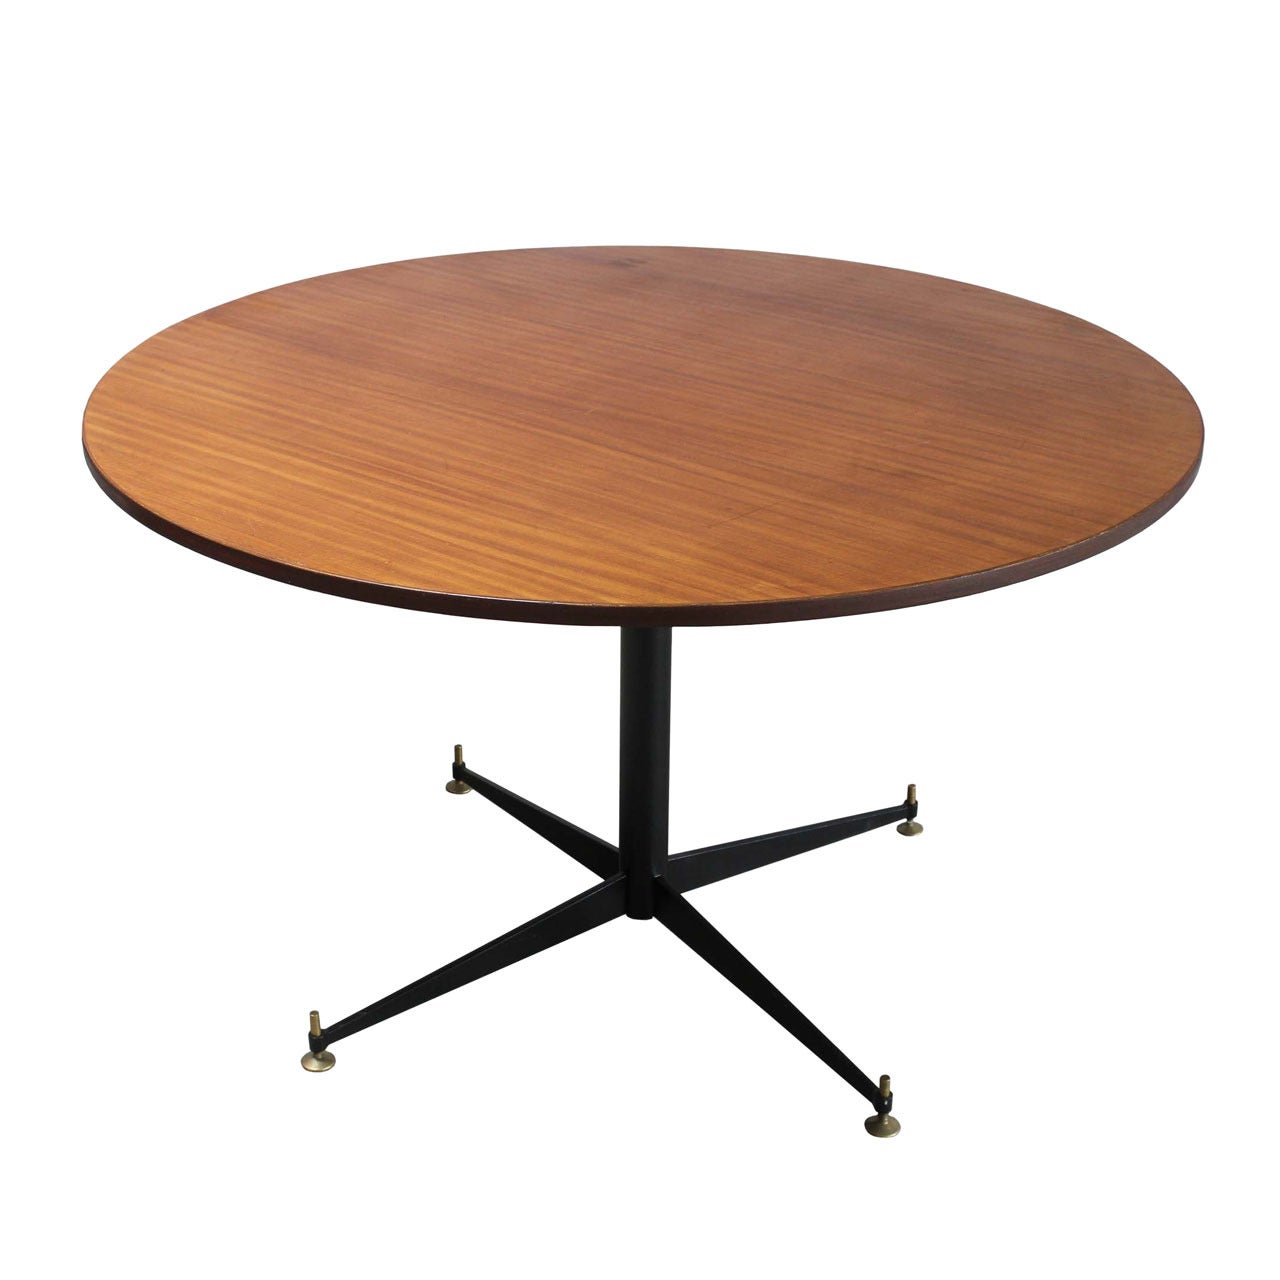 Italian Pedestal Table, style of Osvaldo Borsani For Sale